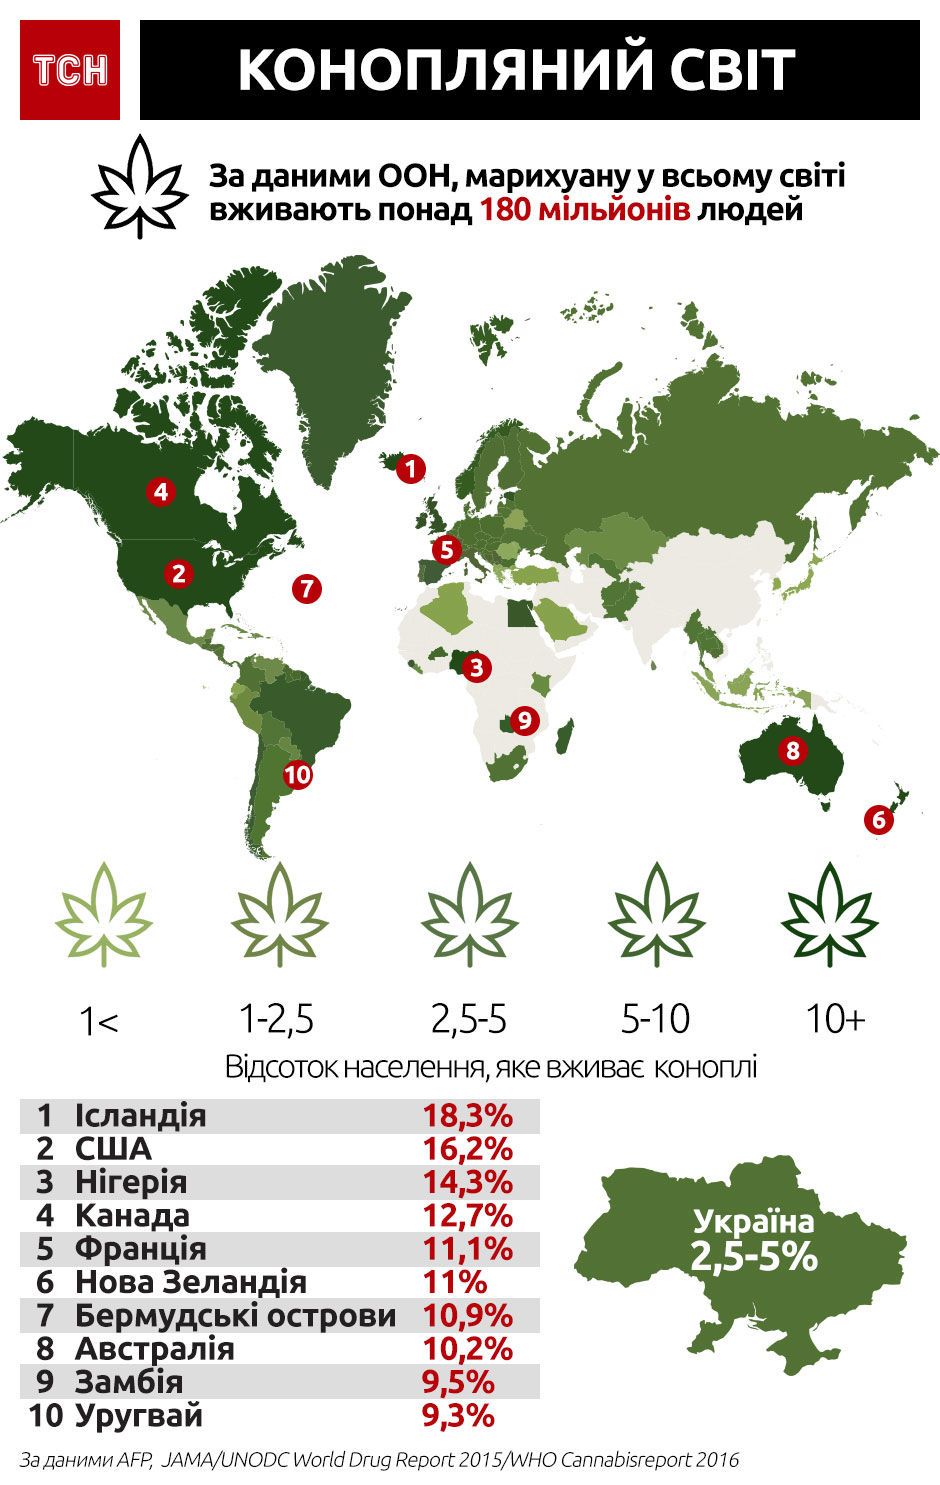 сколько стран легализовали марихуану